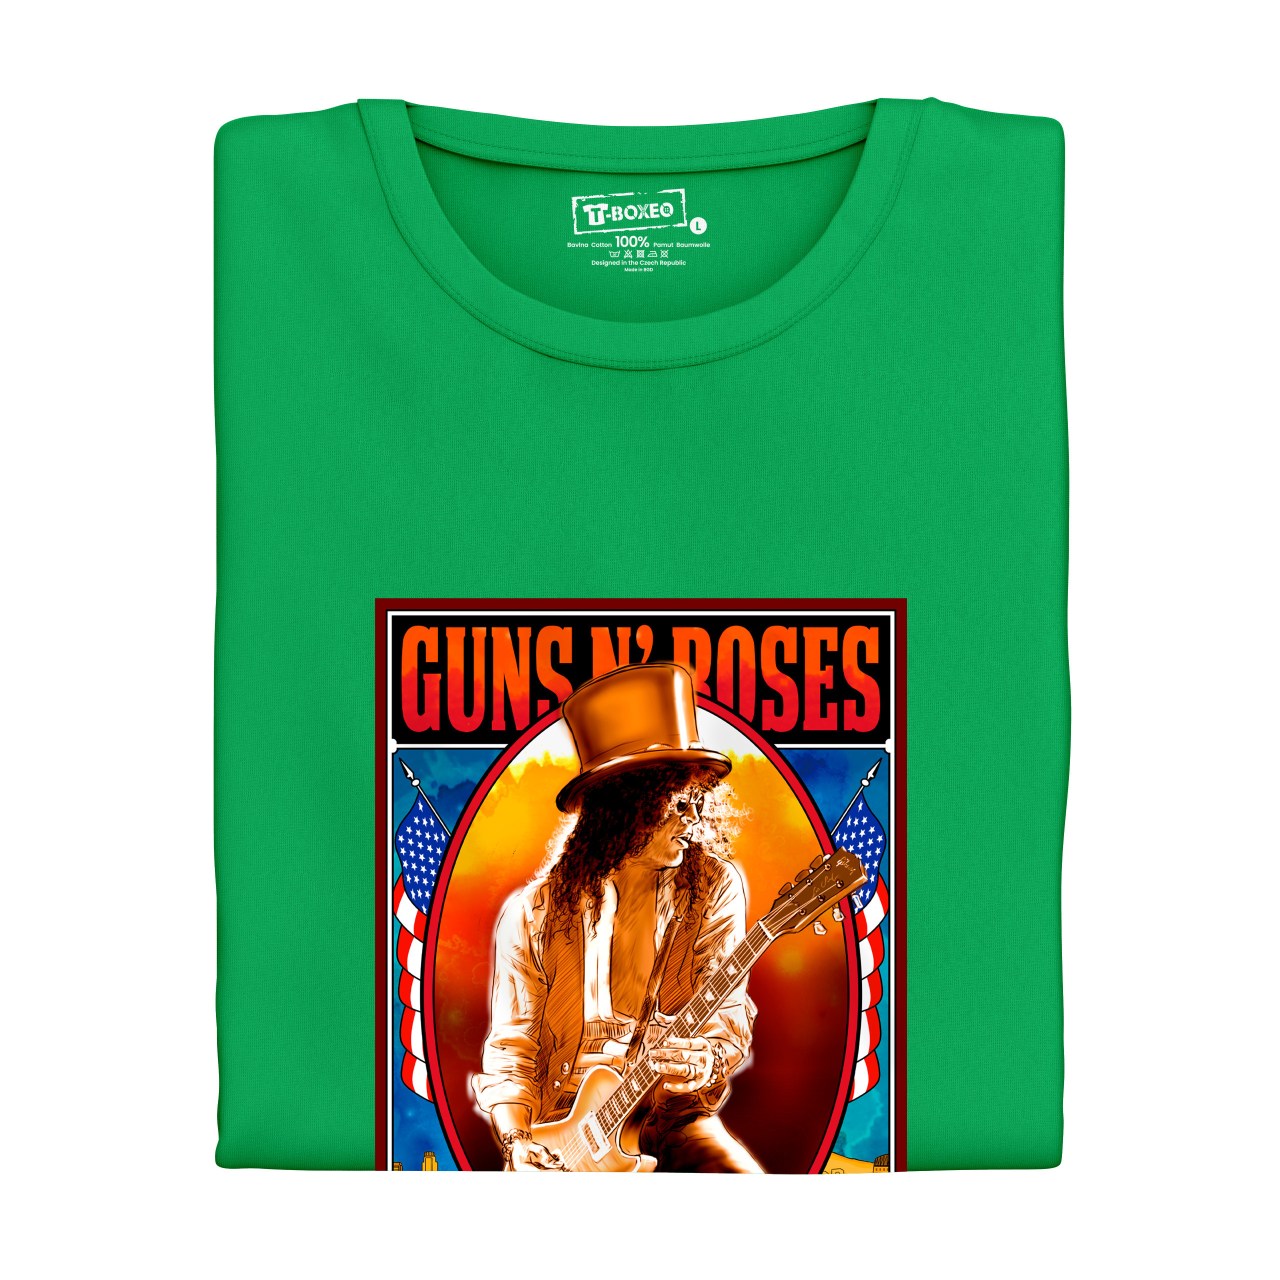 Dámské tričko s potiskem “Guns N' Roses”